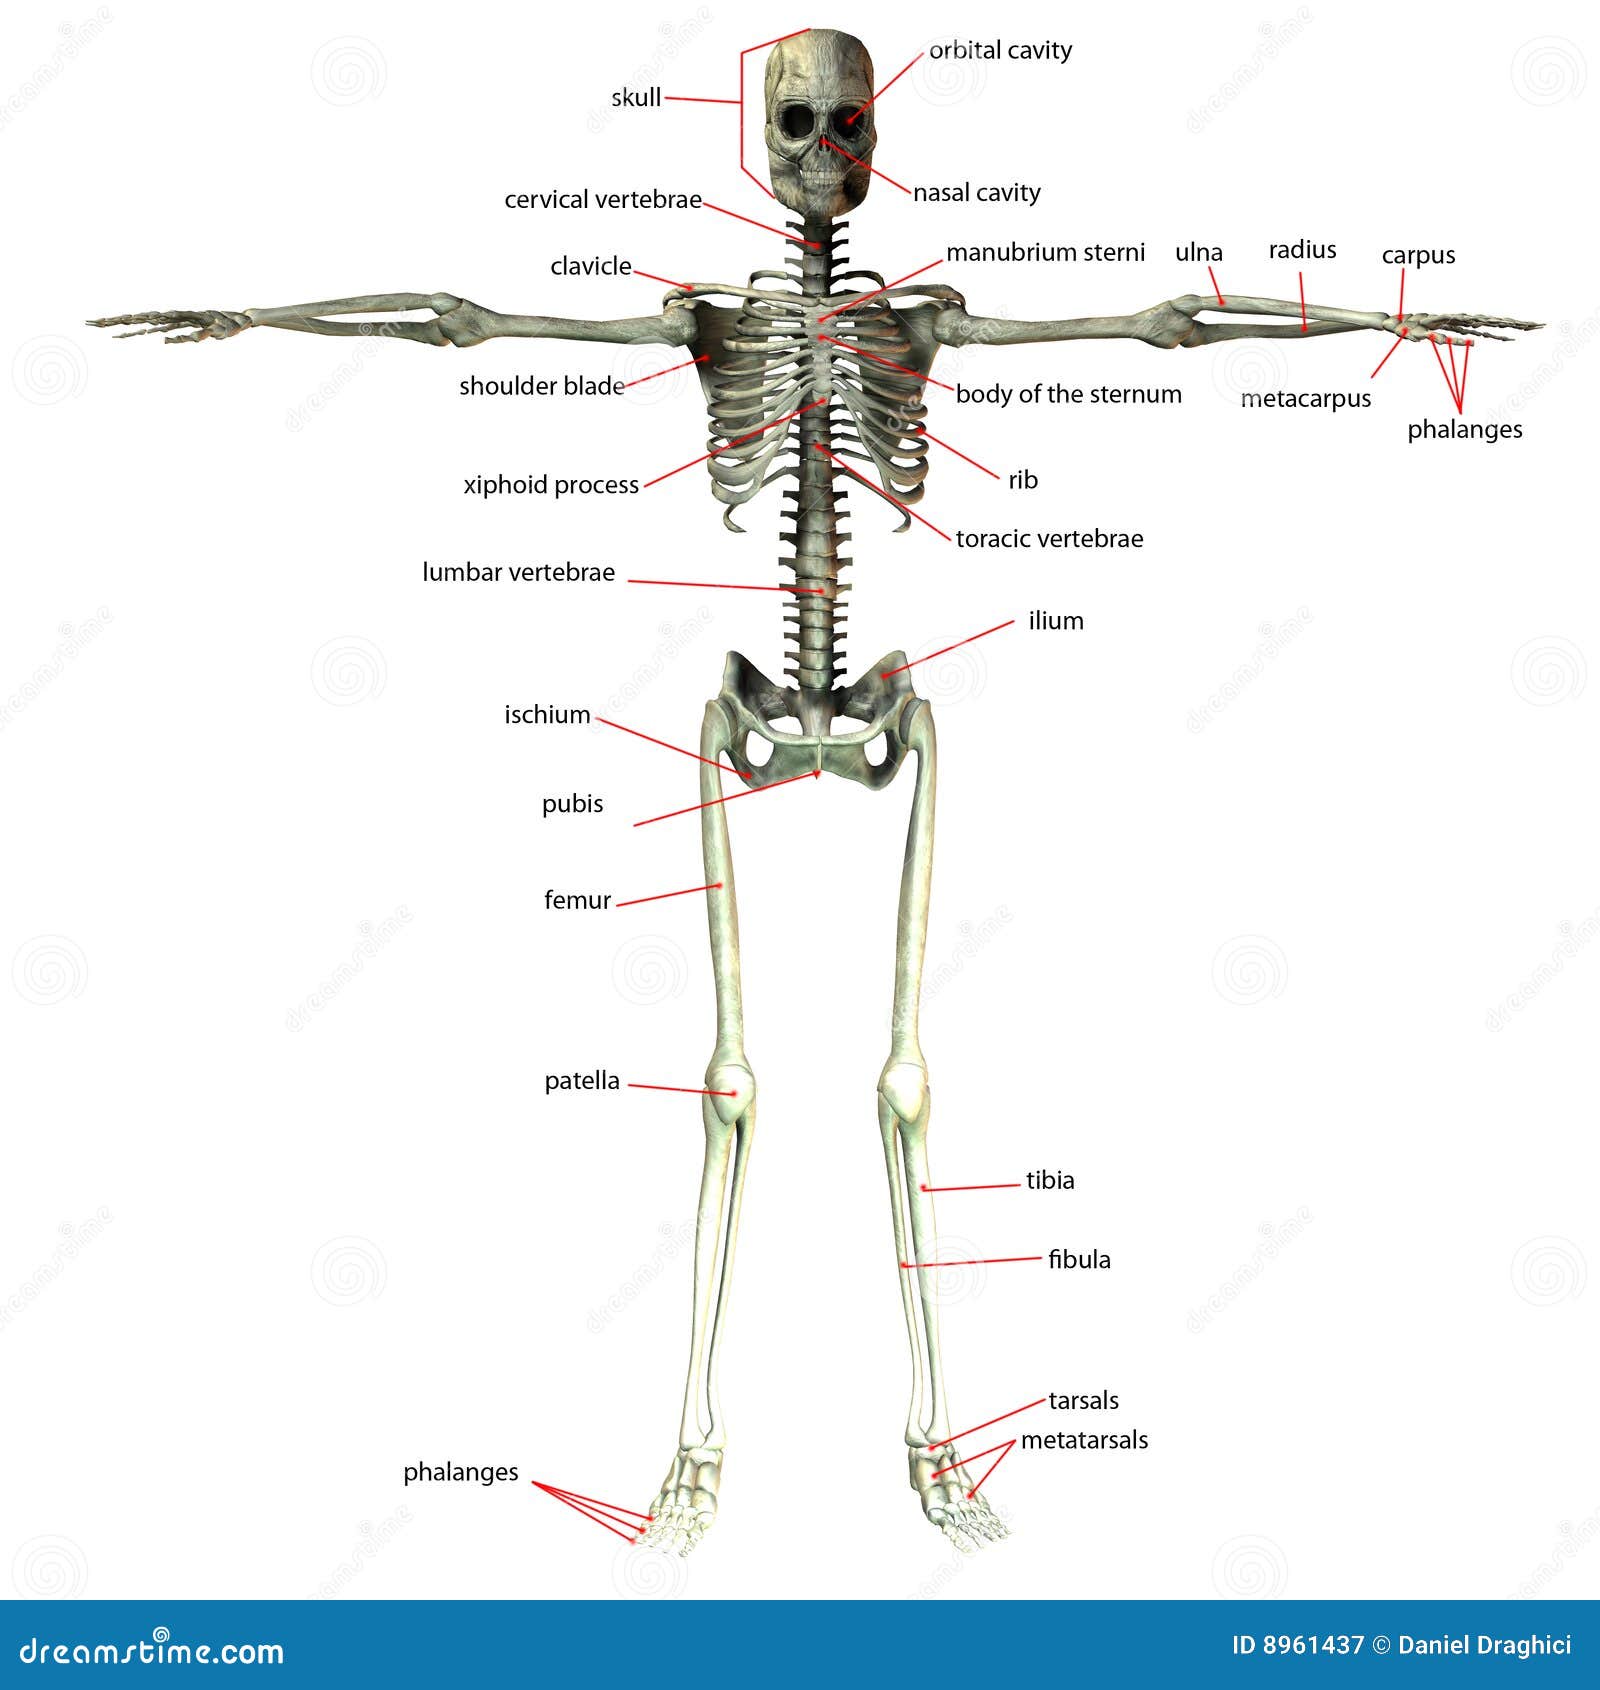 skeleton bone names | Diabetes Inc.